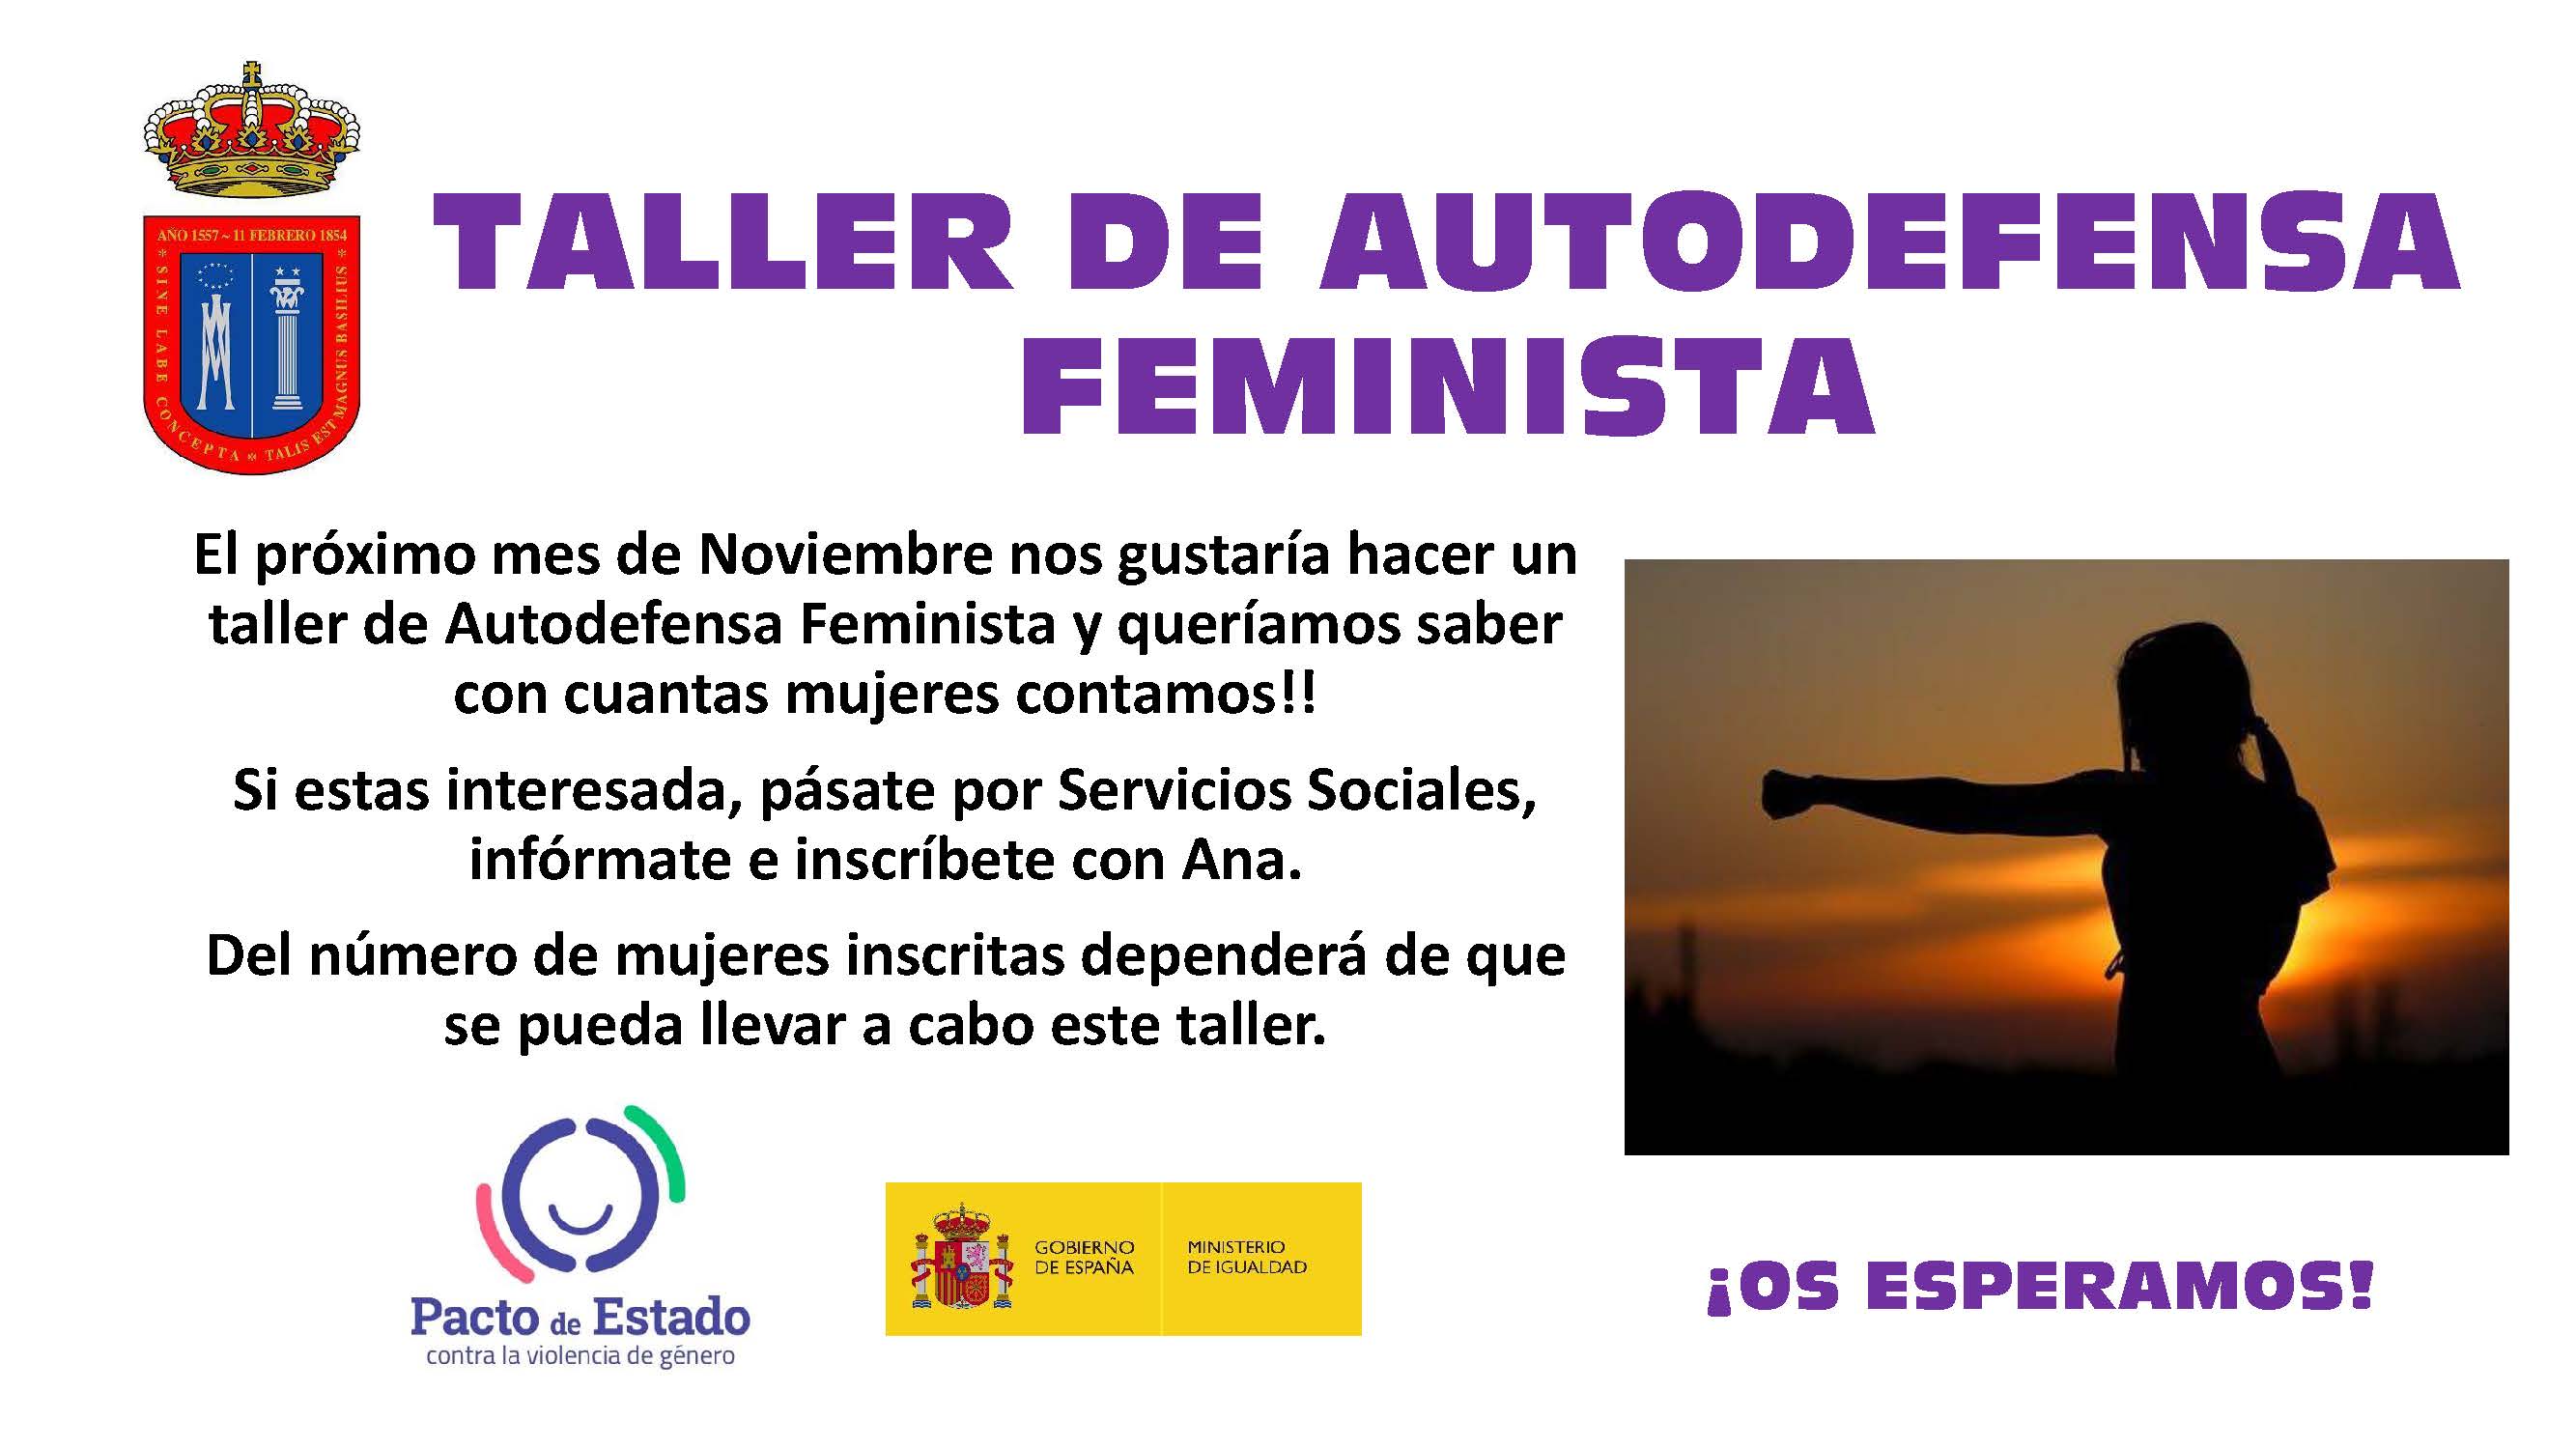 TALLER DE AUTODEFENSA FEMINISTA